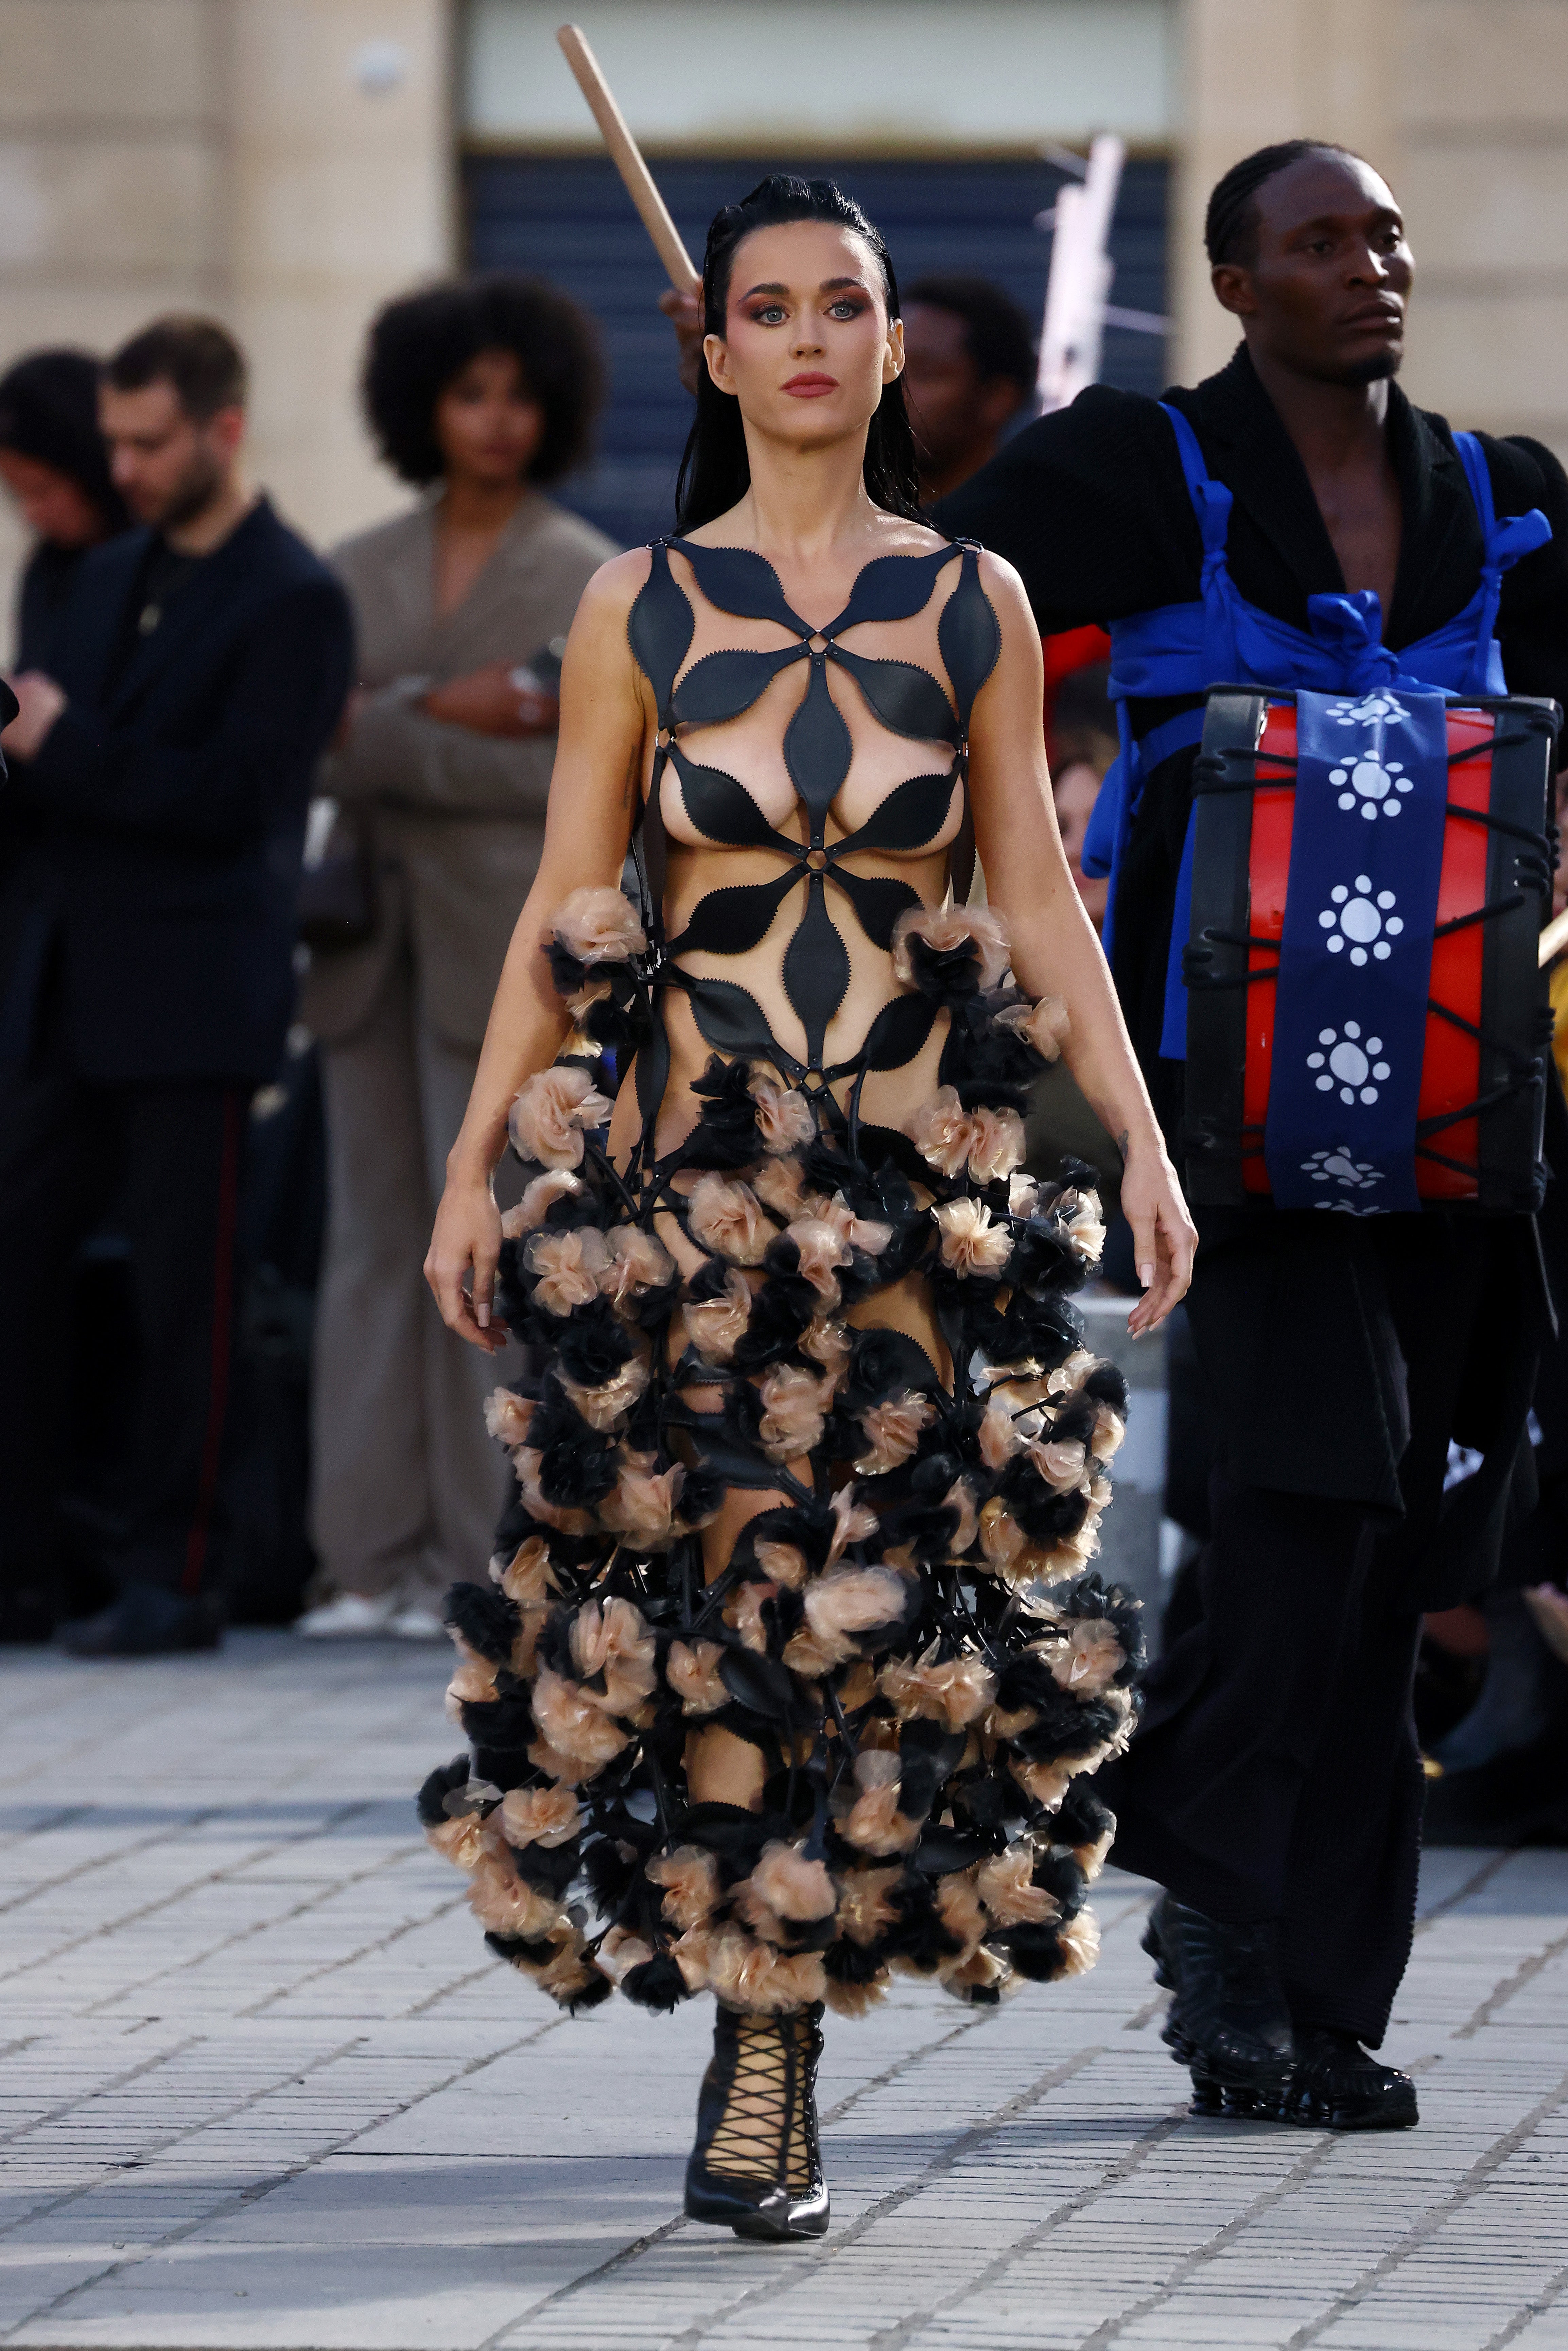 Katy Perry walks in Vogue World: Paris